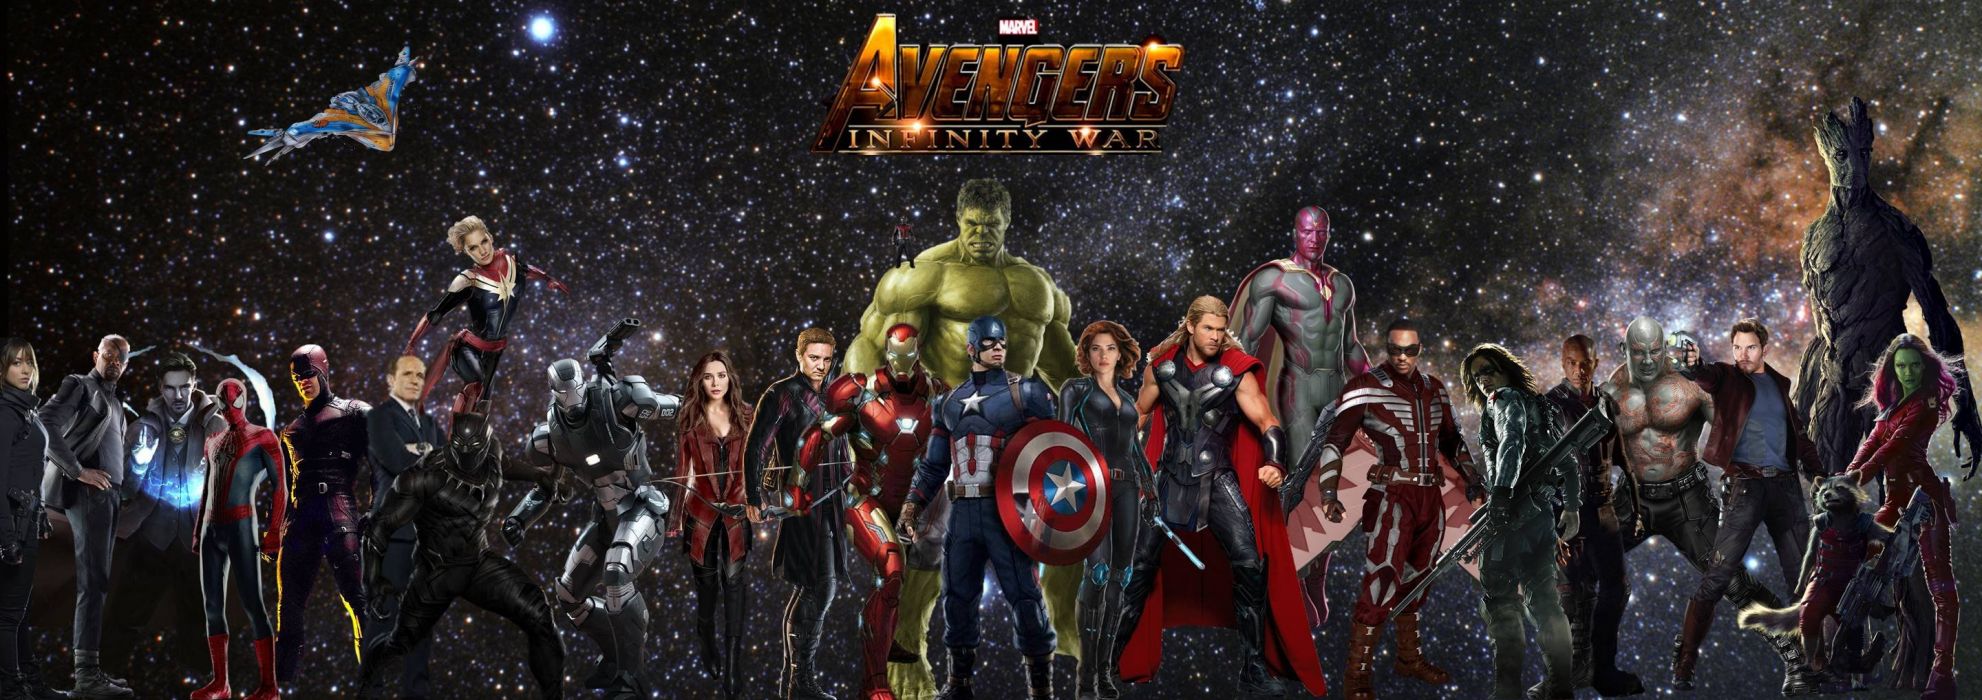 AVENGERS INFINITY WAR Marvel Superhero Action Fighting Warrior Sci Fi 1aiw Poster Wallpaperx1017